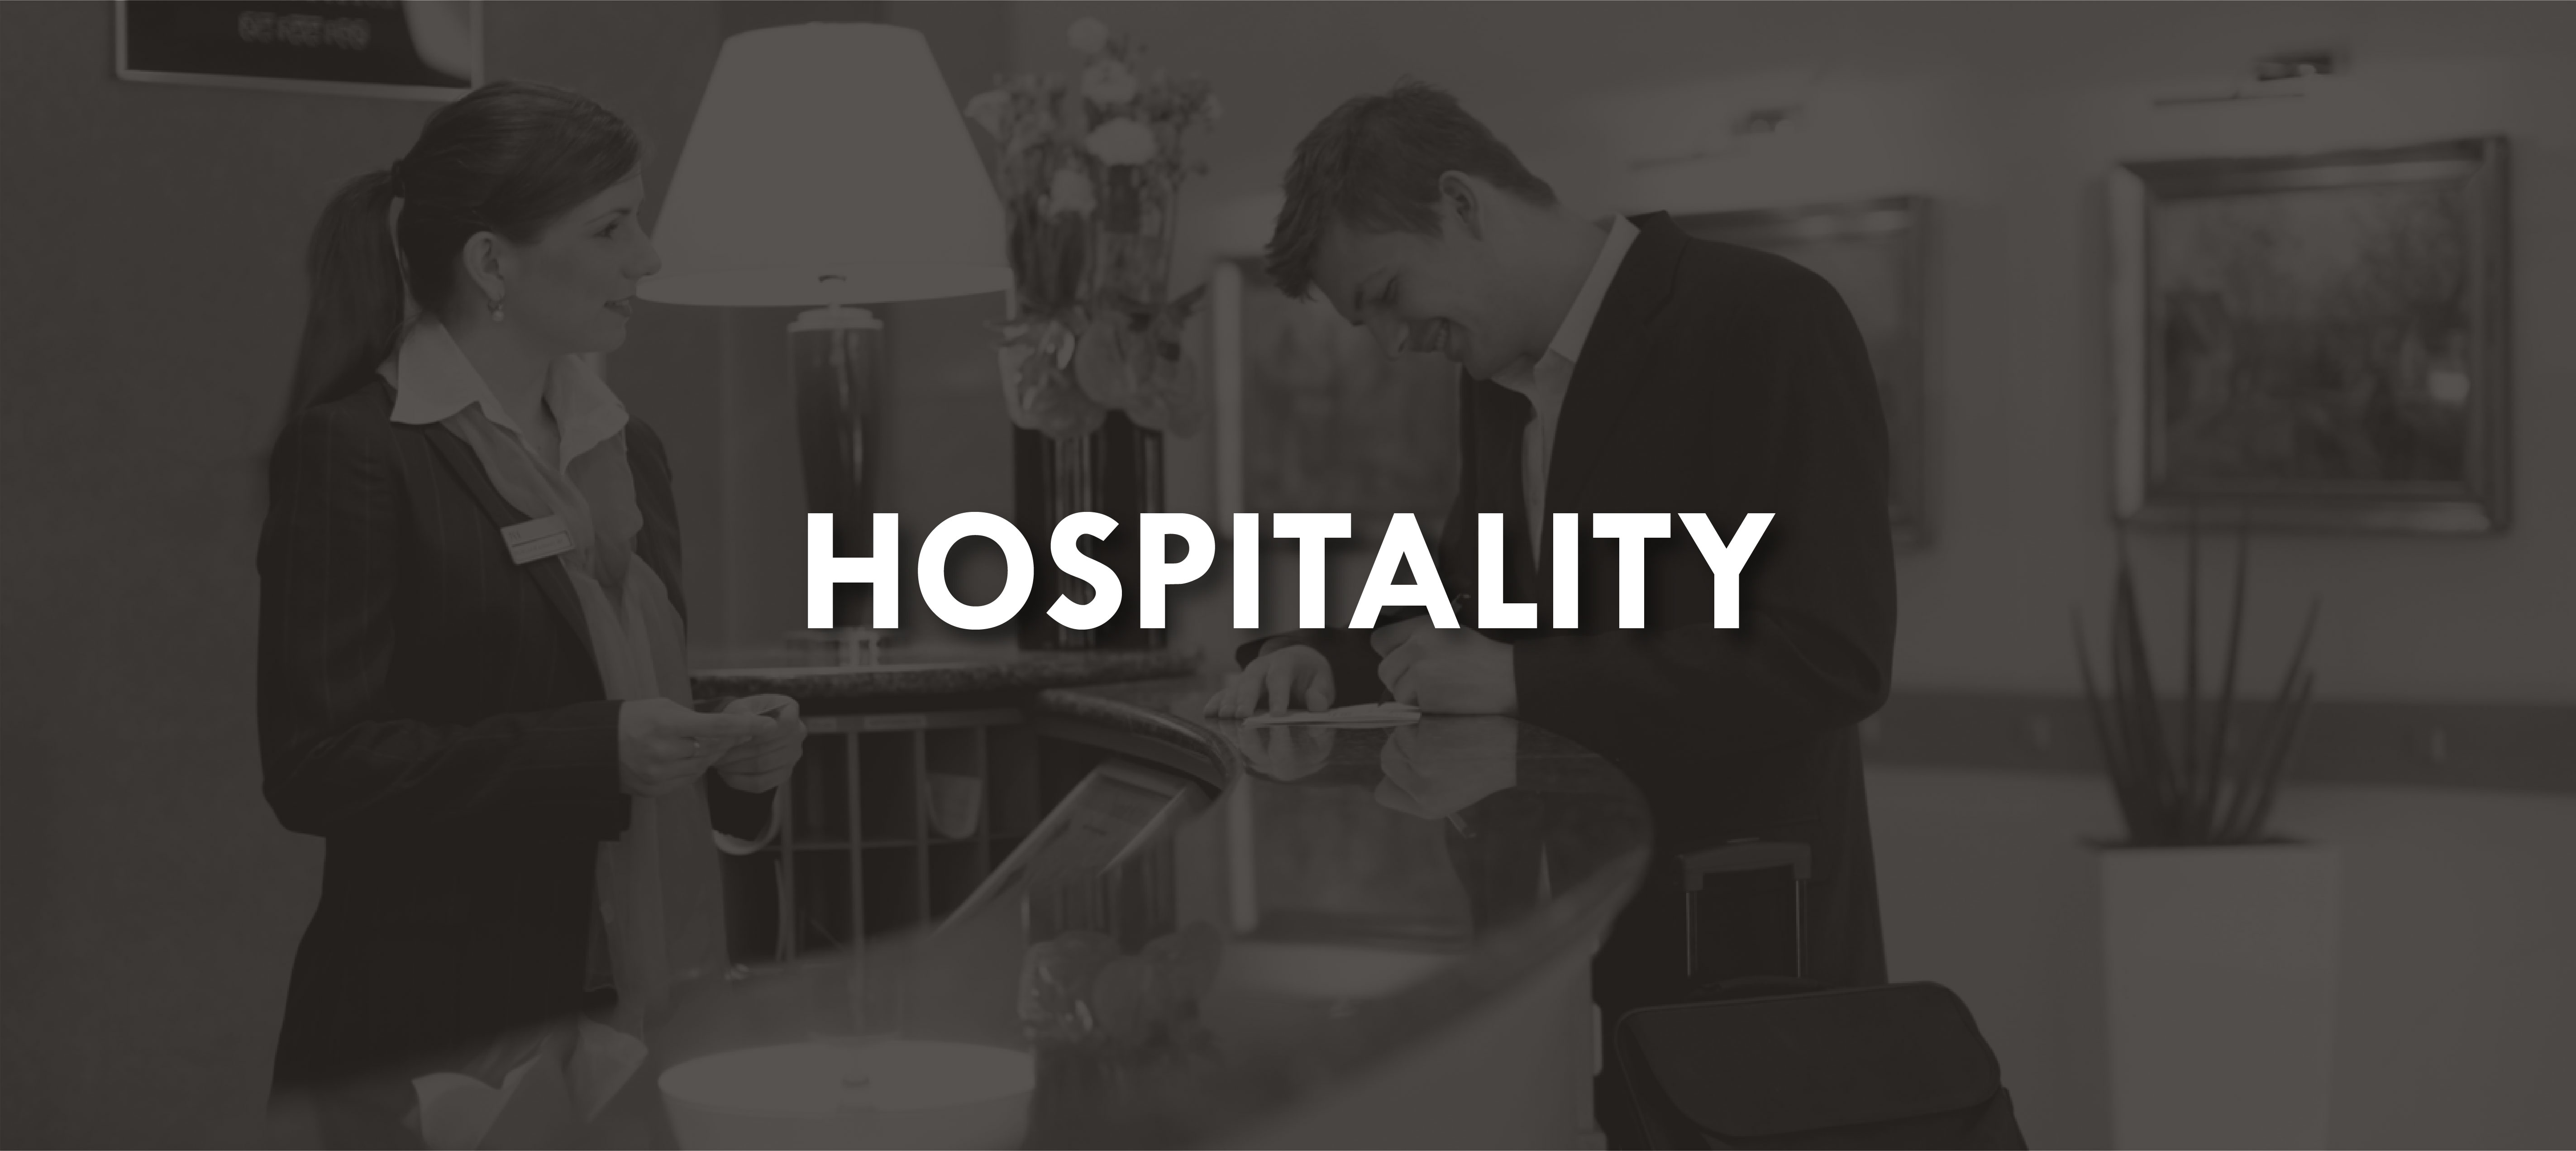 Hospitality Industry Service